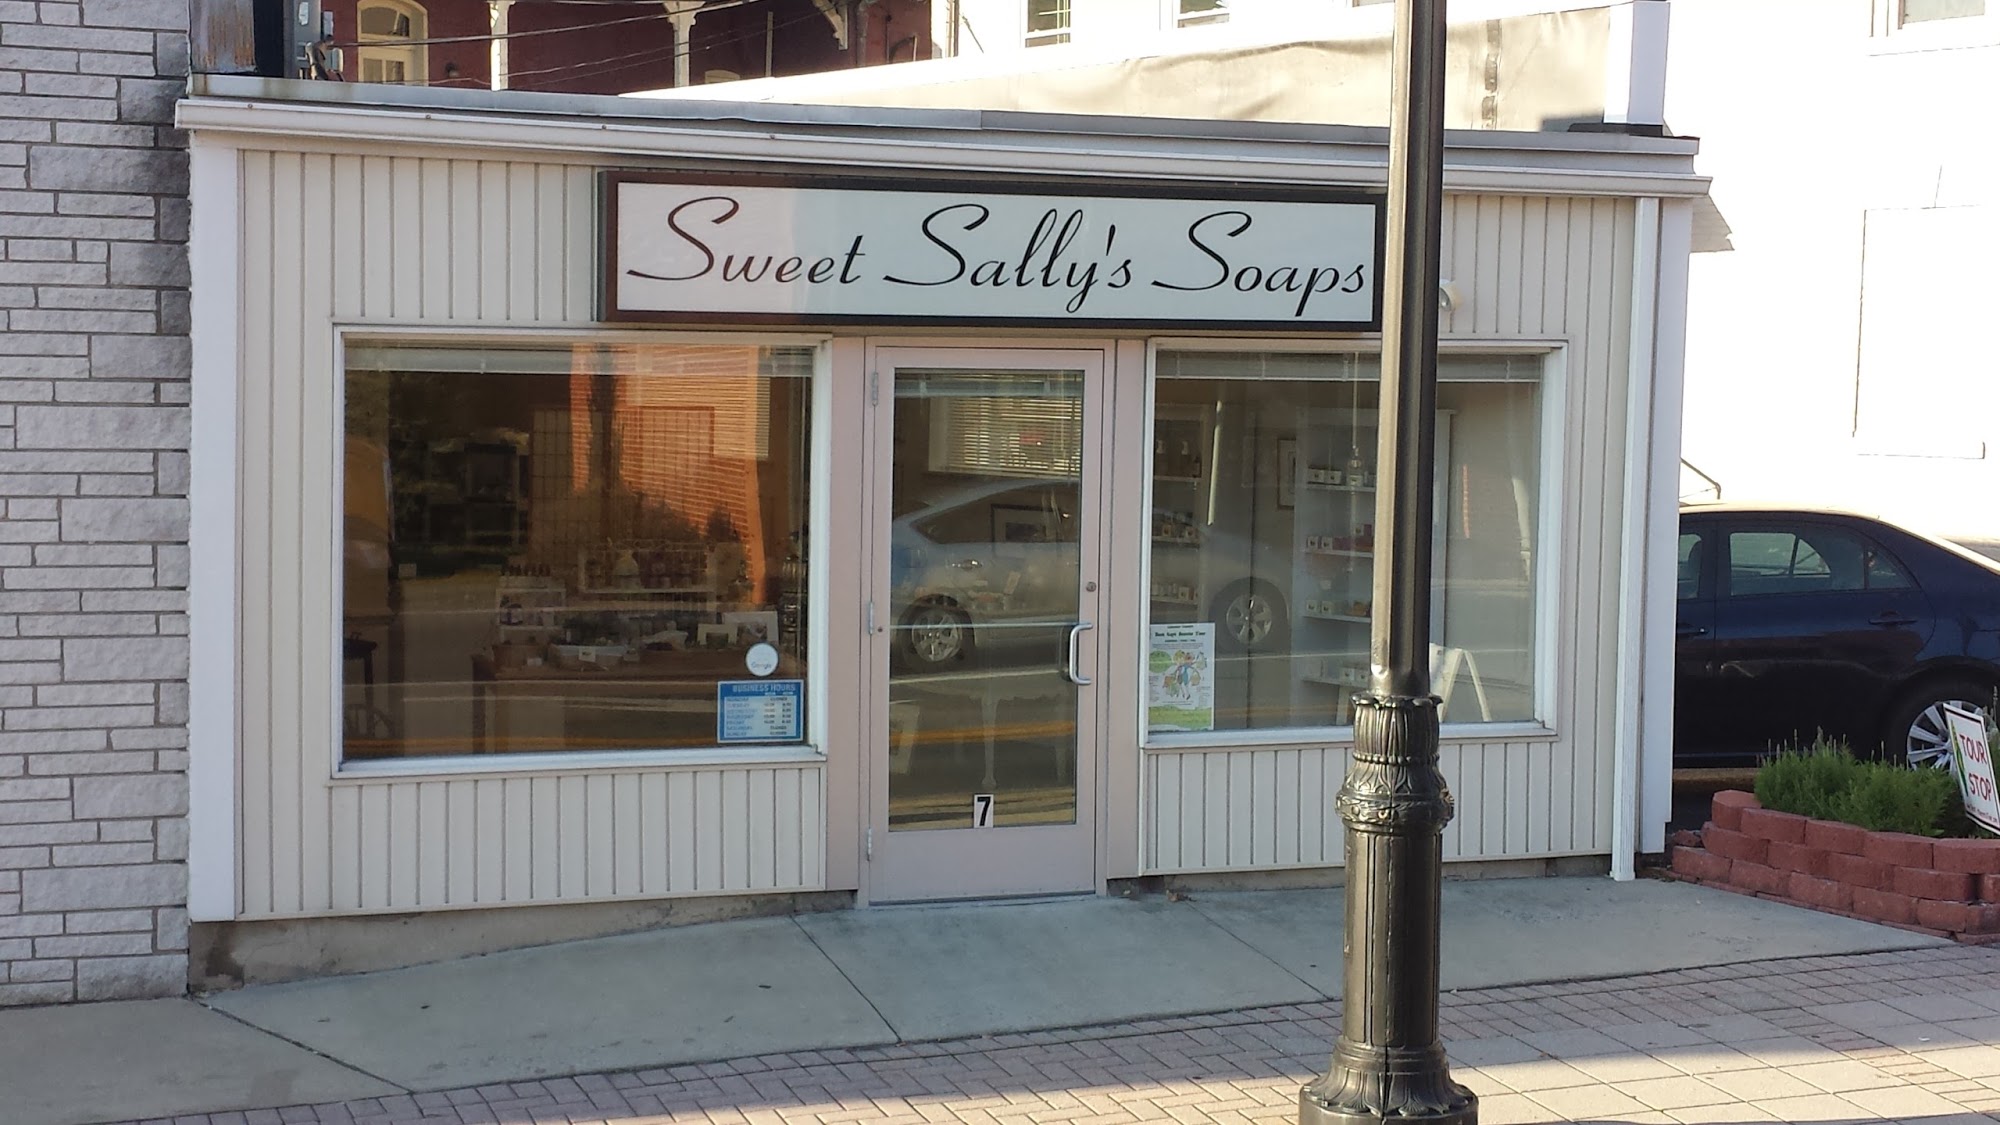 Sweet Sally's Soaps